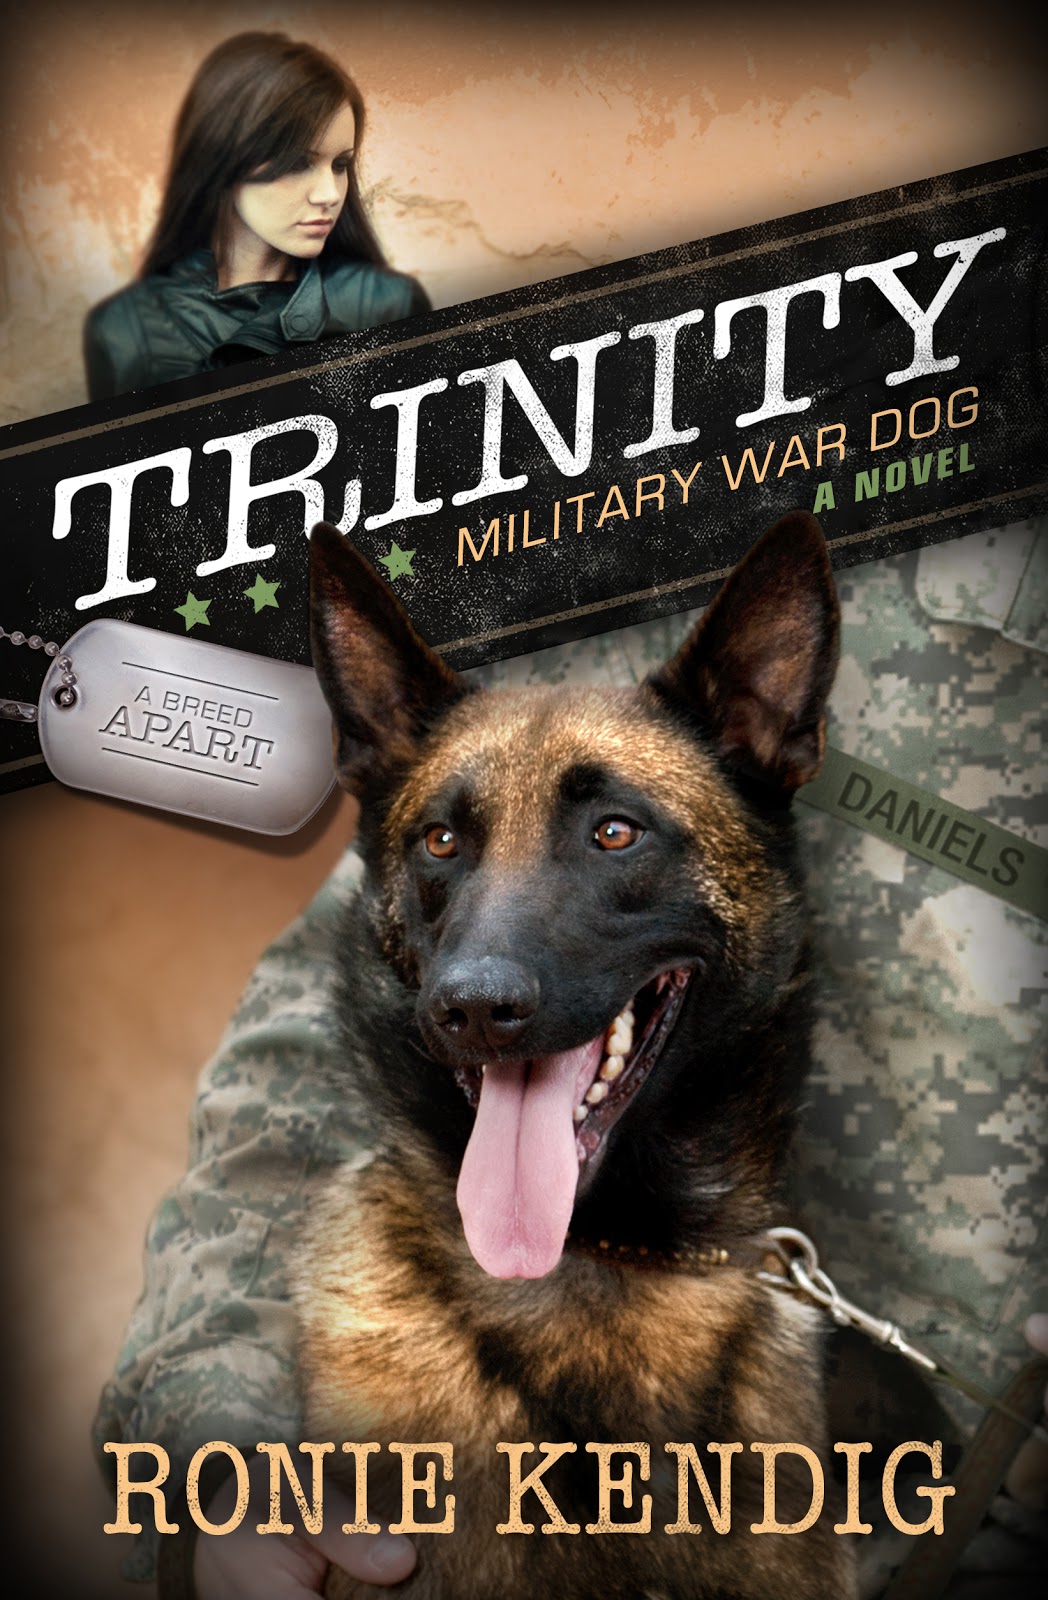 Woof! Trinity: Military War Dog